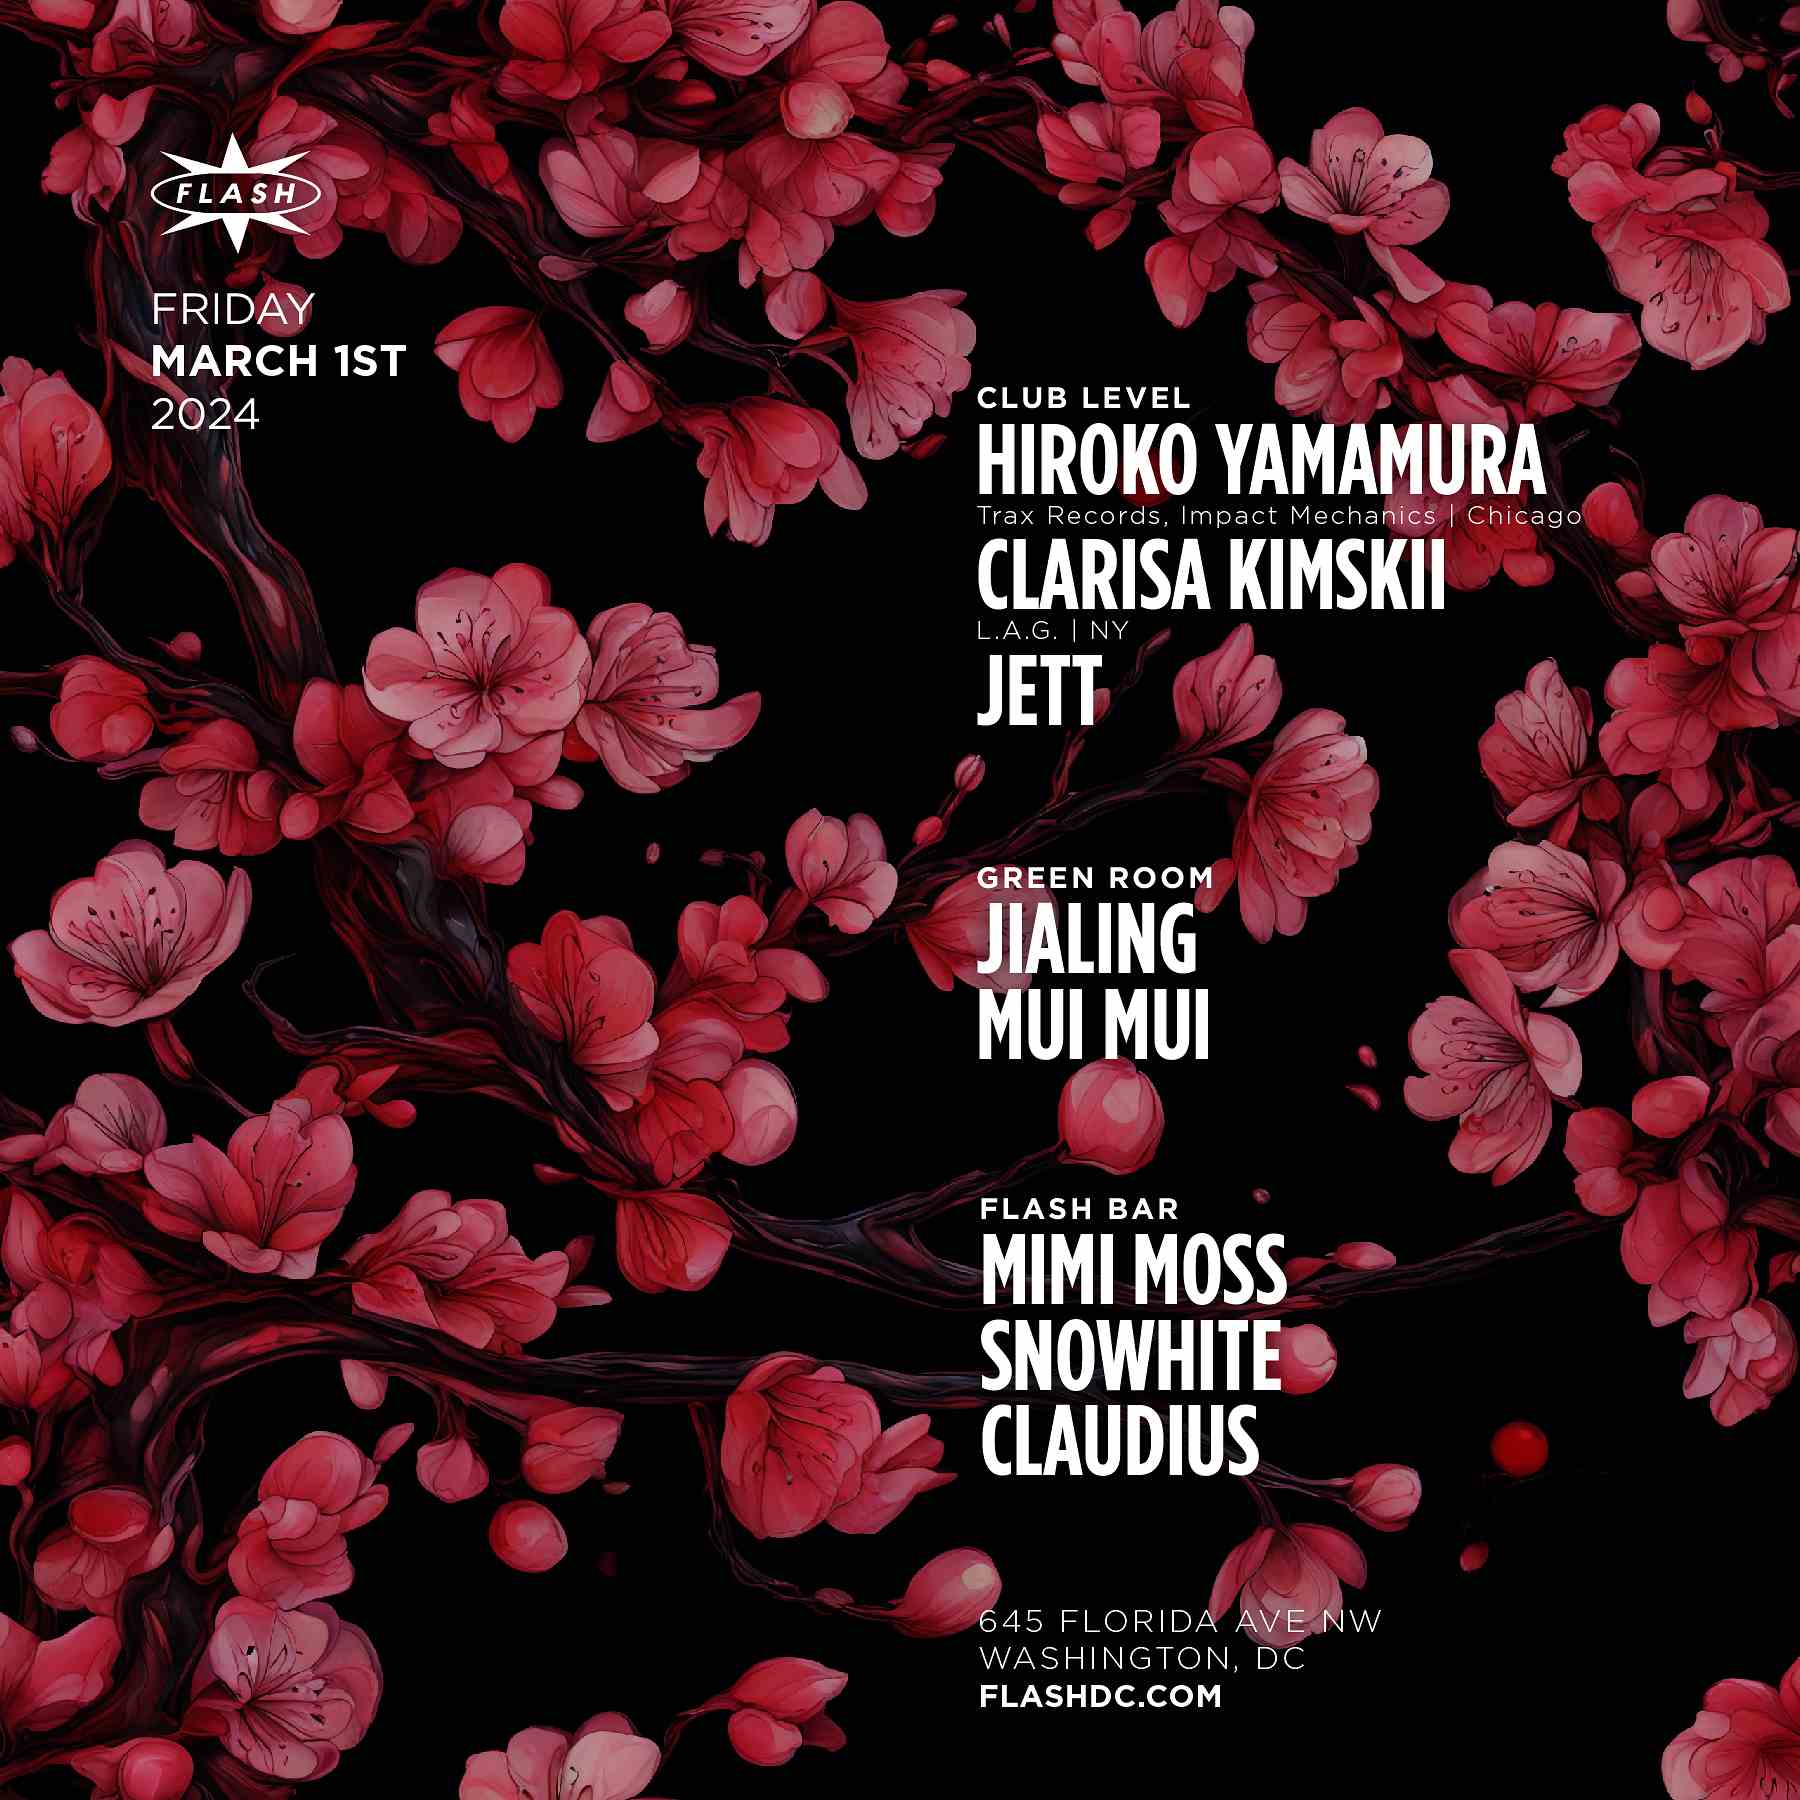 Hiroko Yamamura - Clarisa Kimskii event flyer